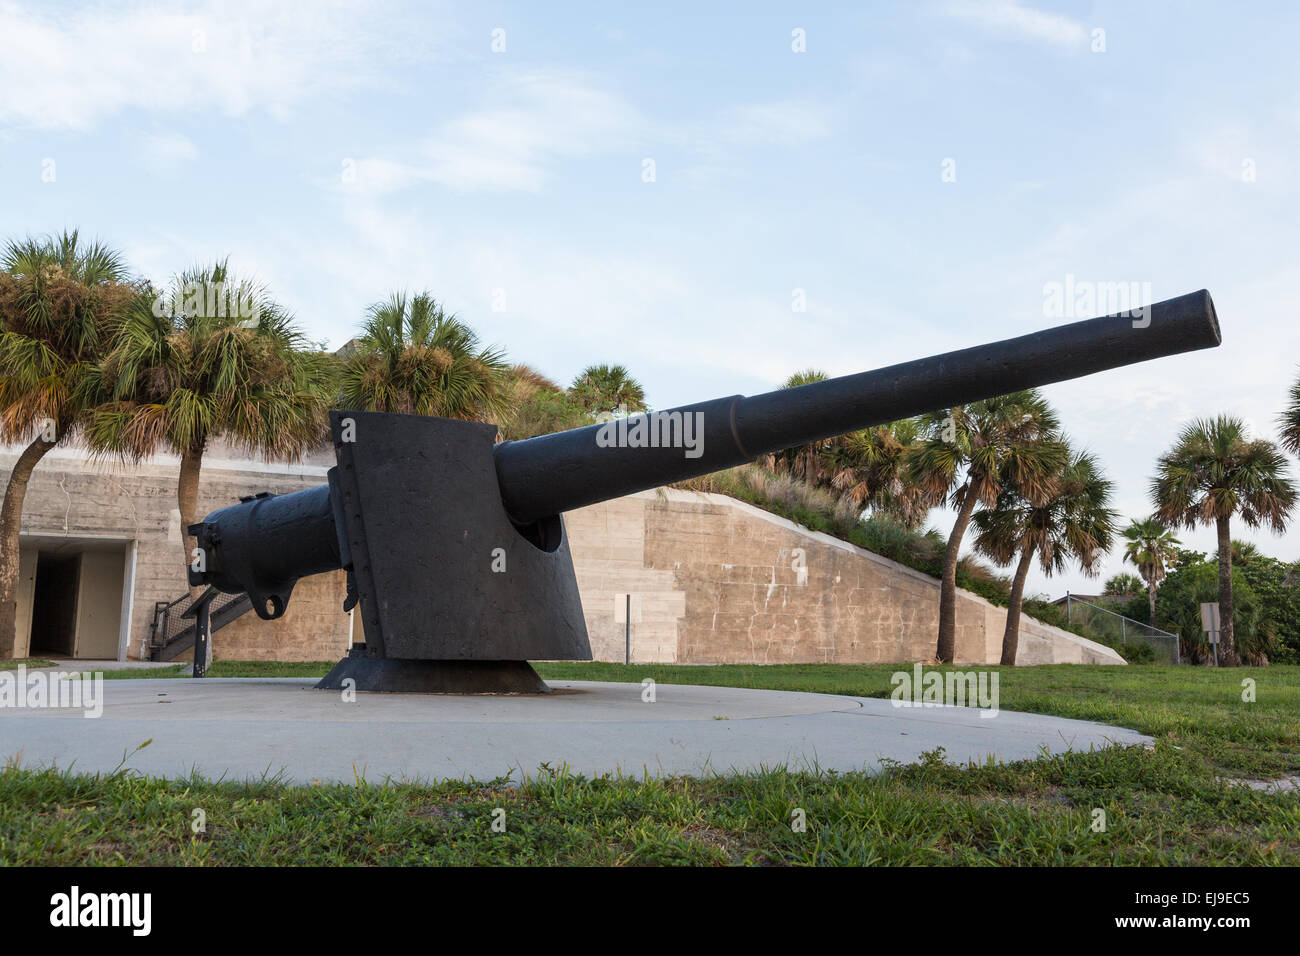 Old artillery guns at Fort de Soto Florida Stock Photo